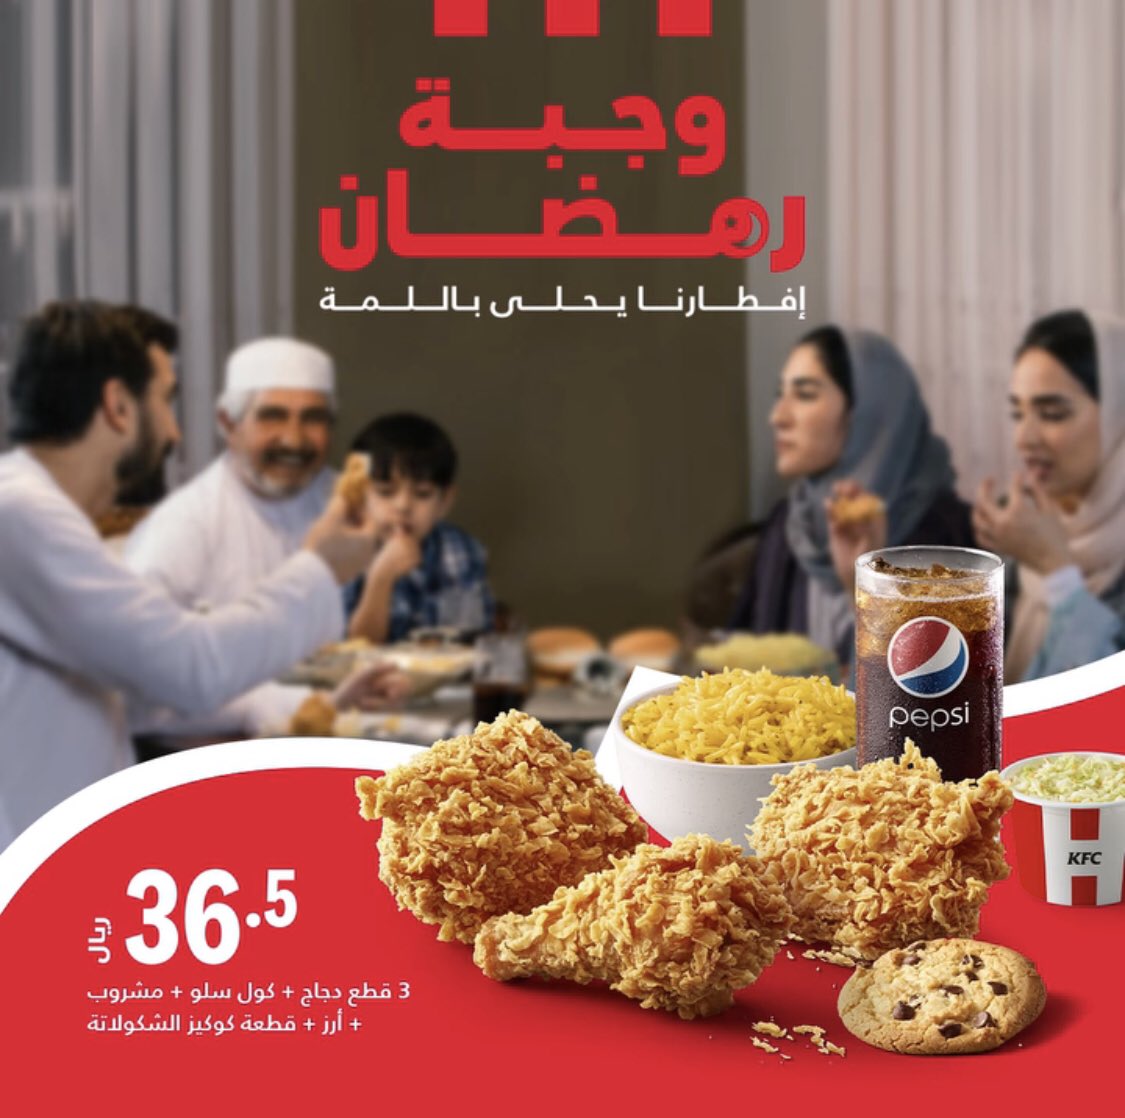 FP1i2FJWUAUy4z - عروض رمضان 2022 : عروض مطعم كنتاكي لوجبات الافطار